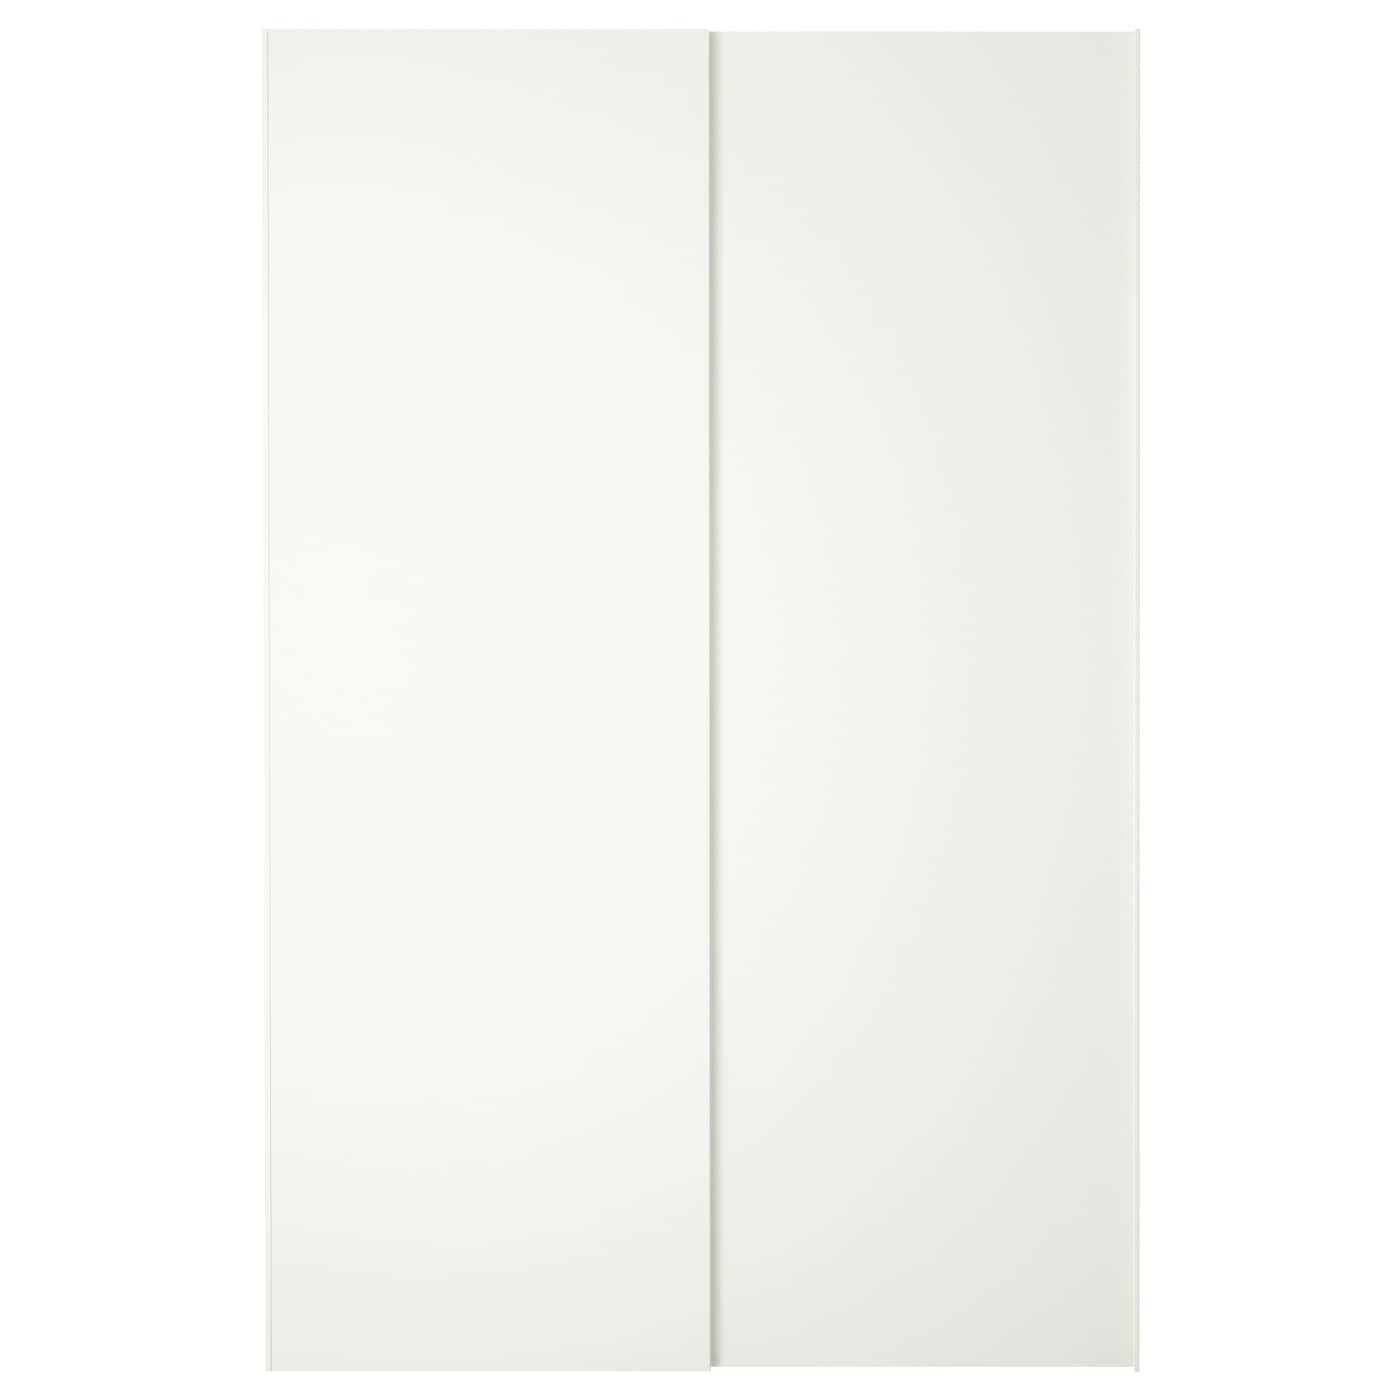 Пара рам раздвижных дверей - HASVIK IKEA/ ХАСВИК ИКЕА, 150х236 см, белый